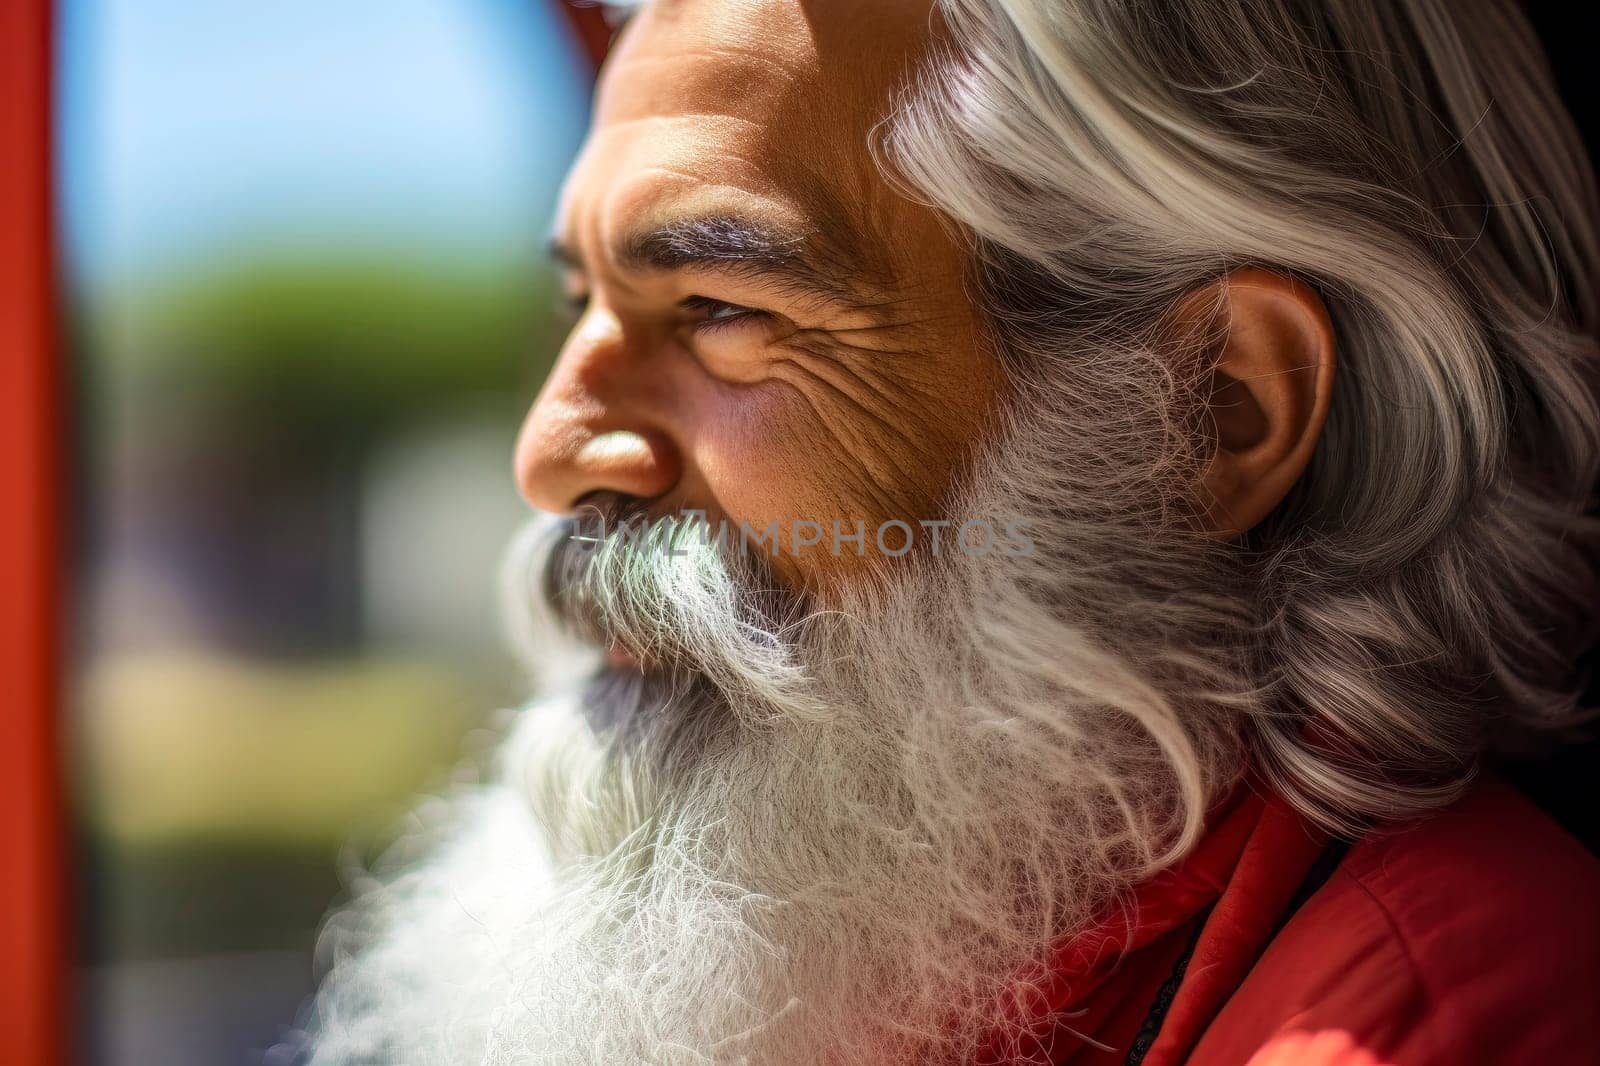 Wise Elderly Gentleman with Long Beard by pippocarlot